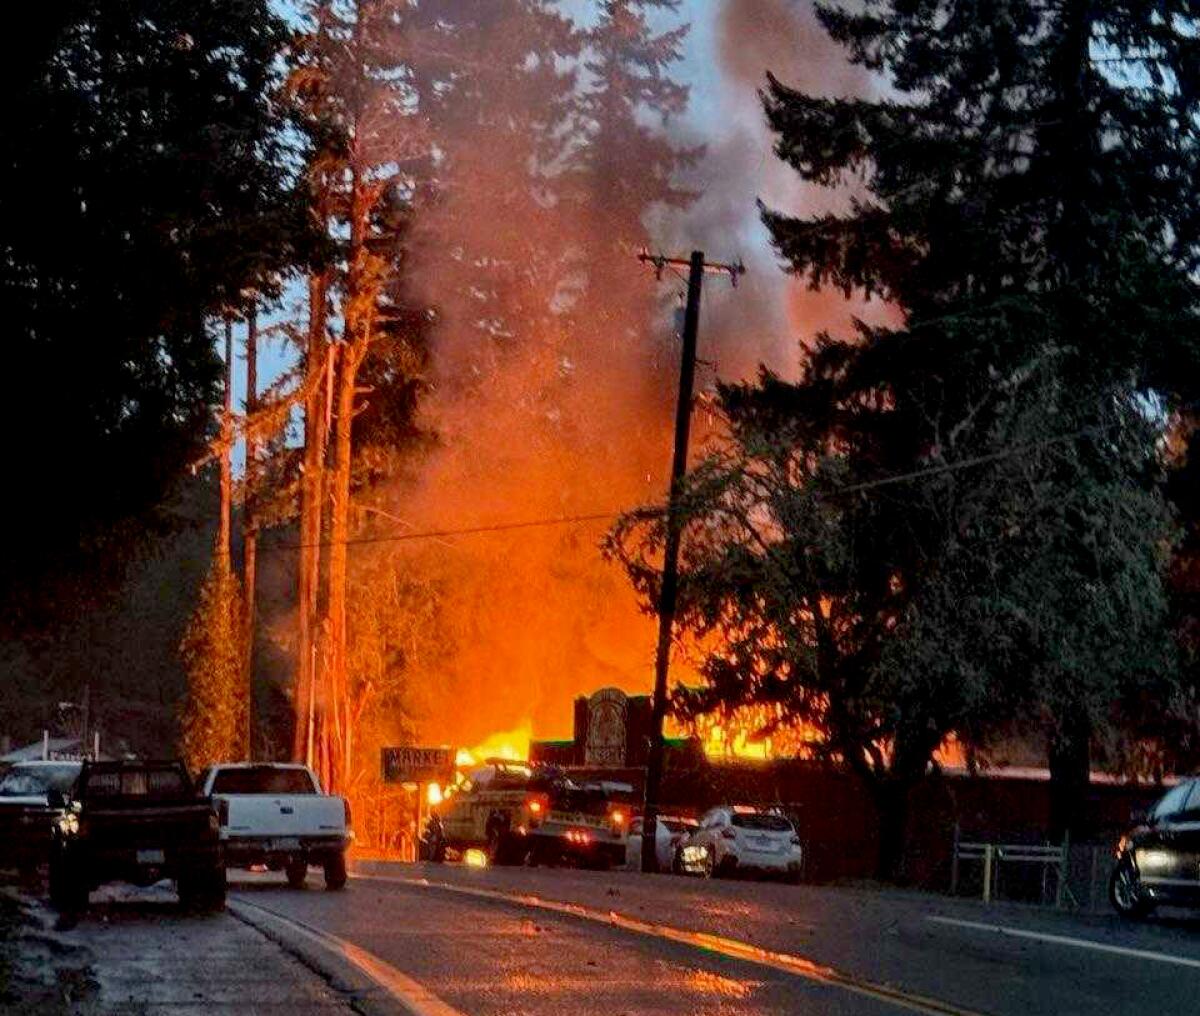 Flames cast an orange glow on a tree-lined rural street.